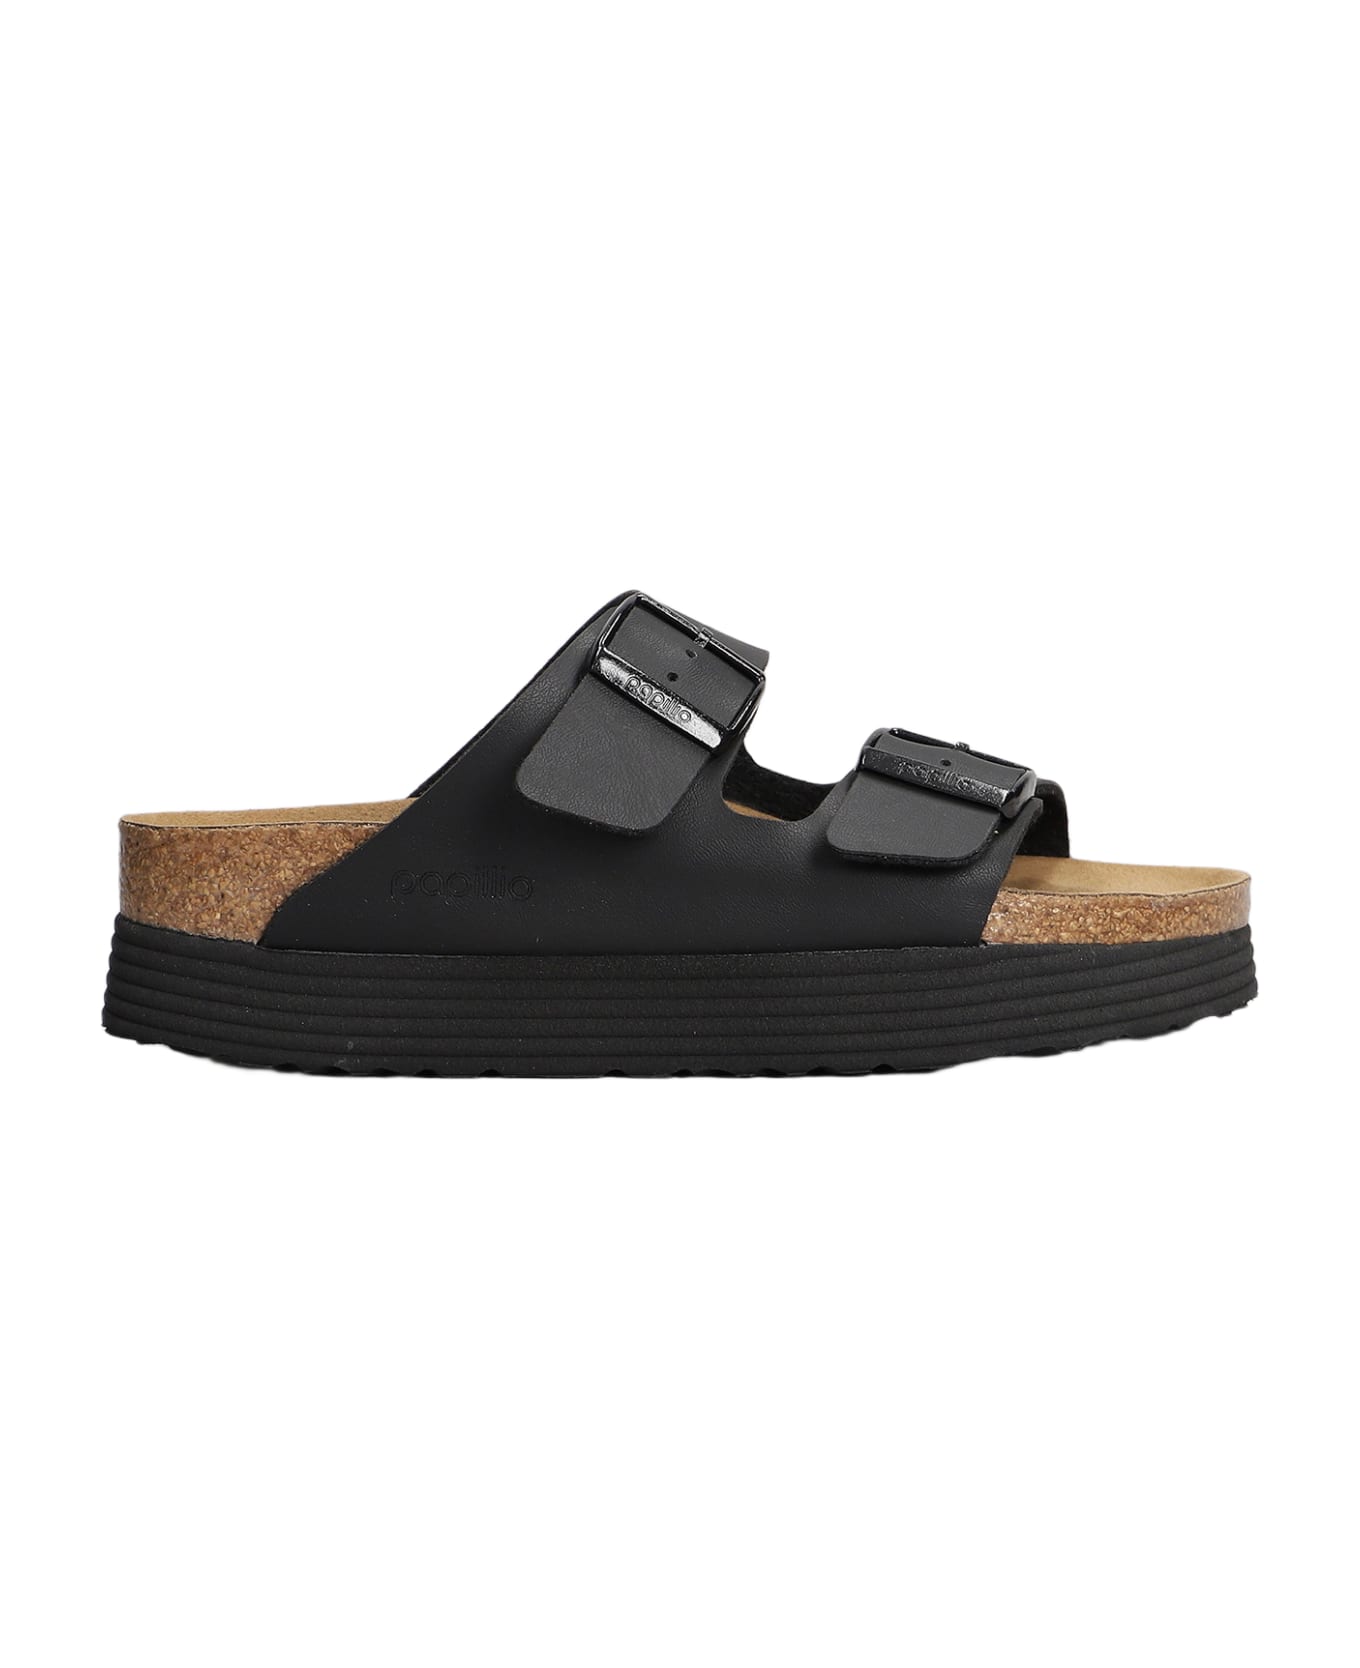 Birkenstock Arizona Grooved Sandals - Black サンダル